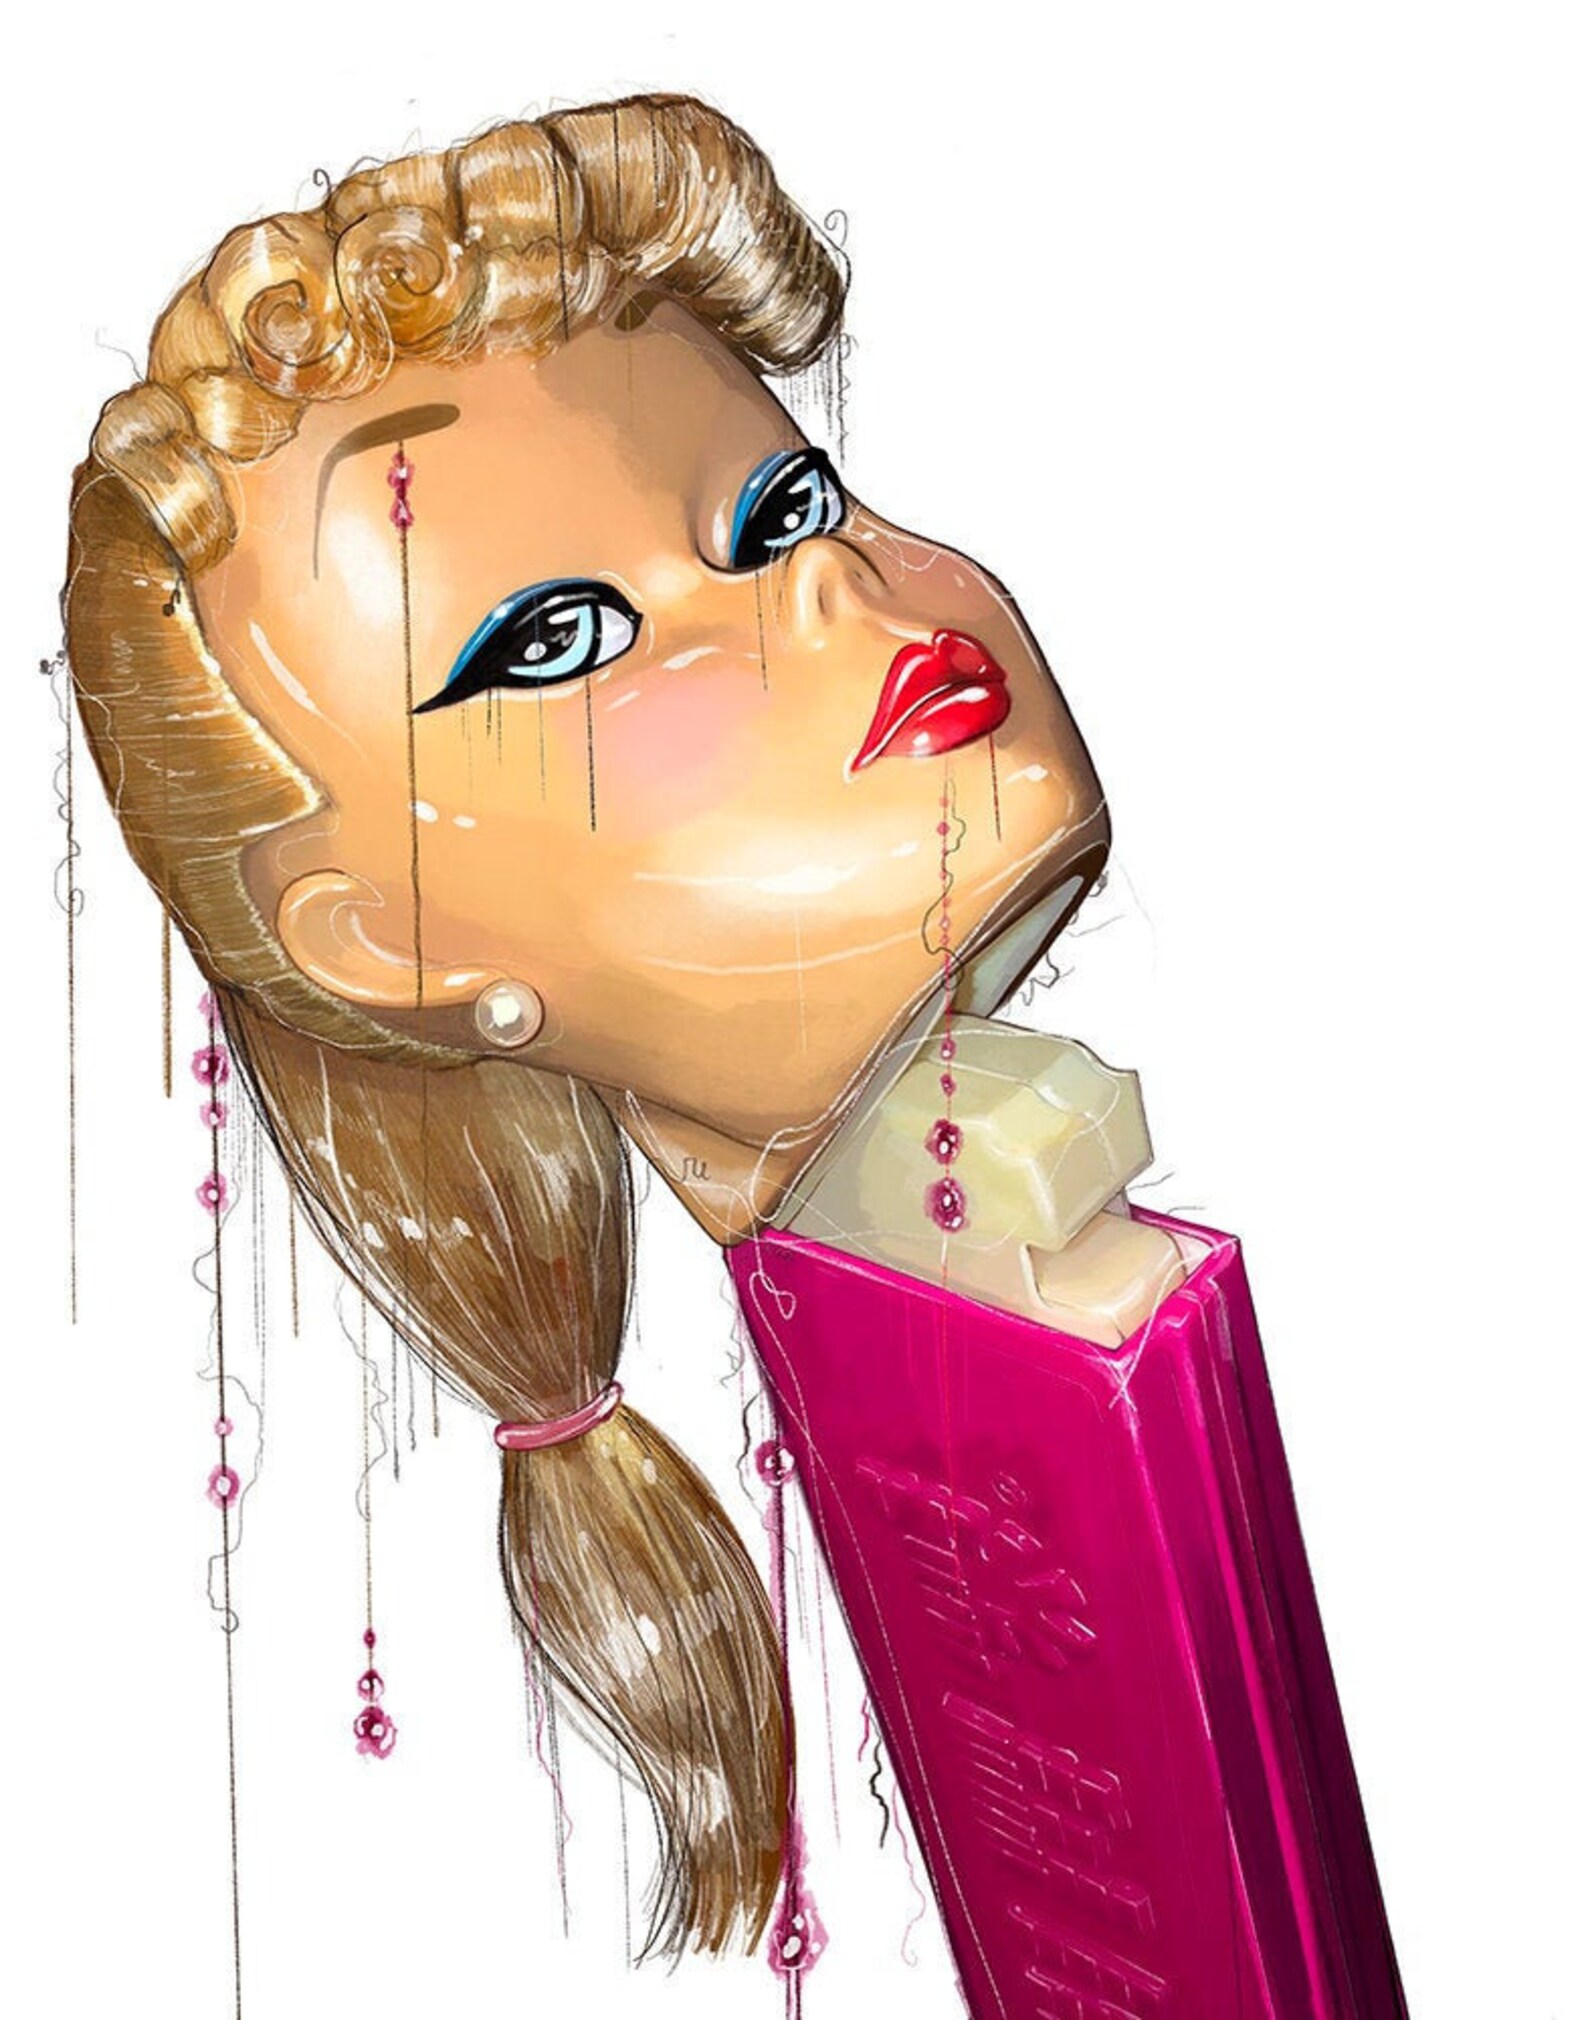 Barbie Fish MELTED PLASTIC Digital Illustration | Etsy